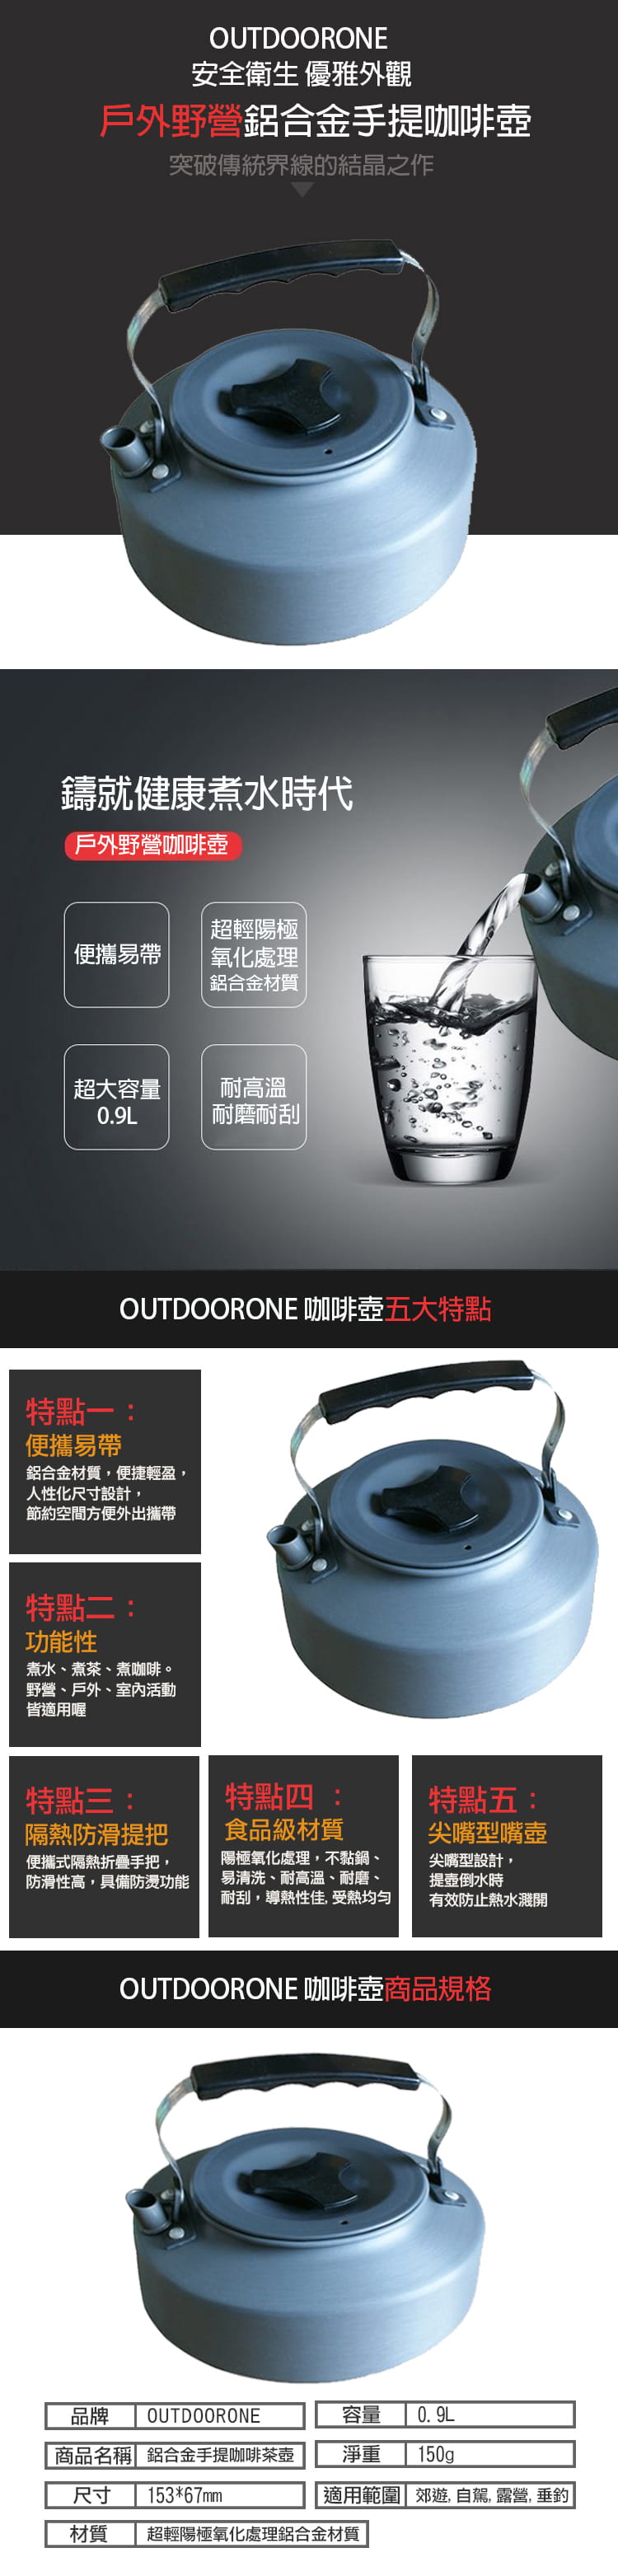 【OUTDOORONE】鋁合金手提咖啡茶壺0.9L 超輕陽極氧化 1